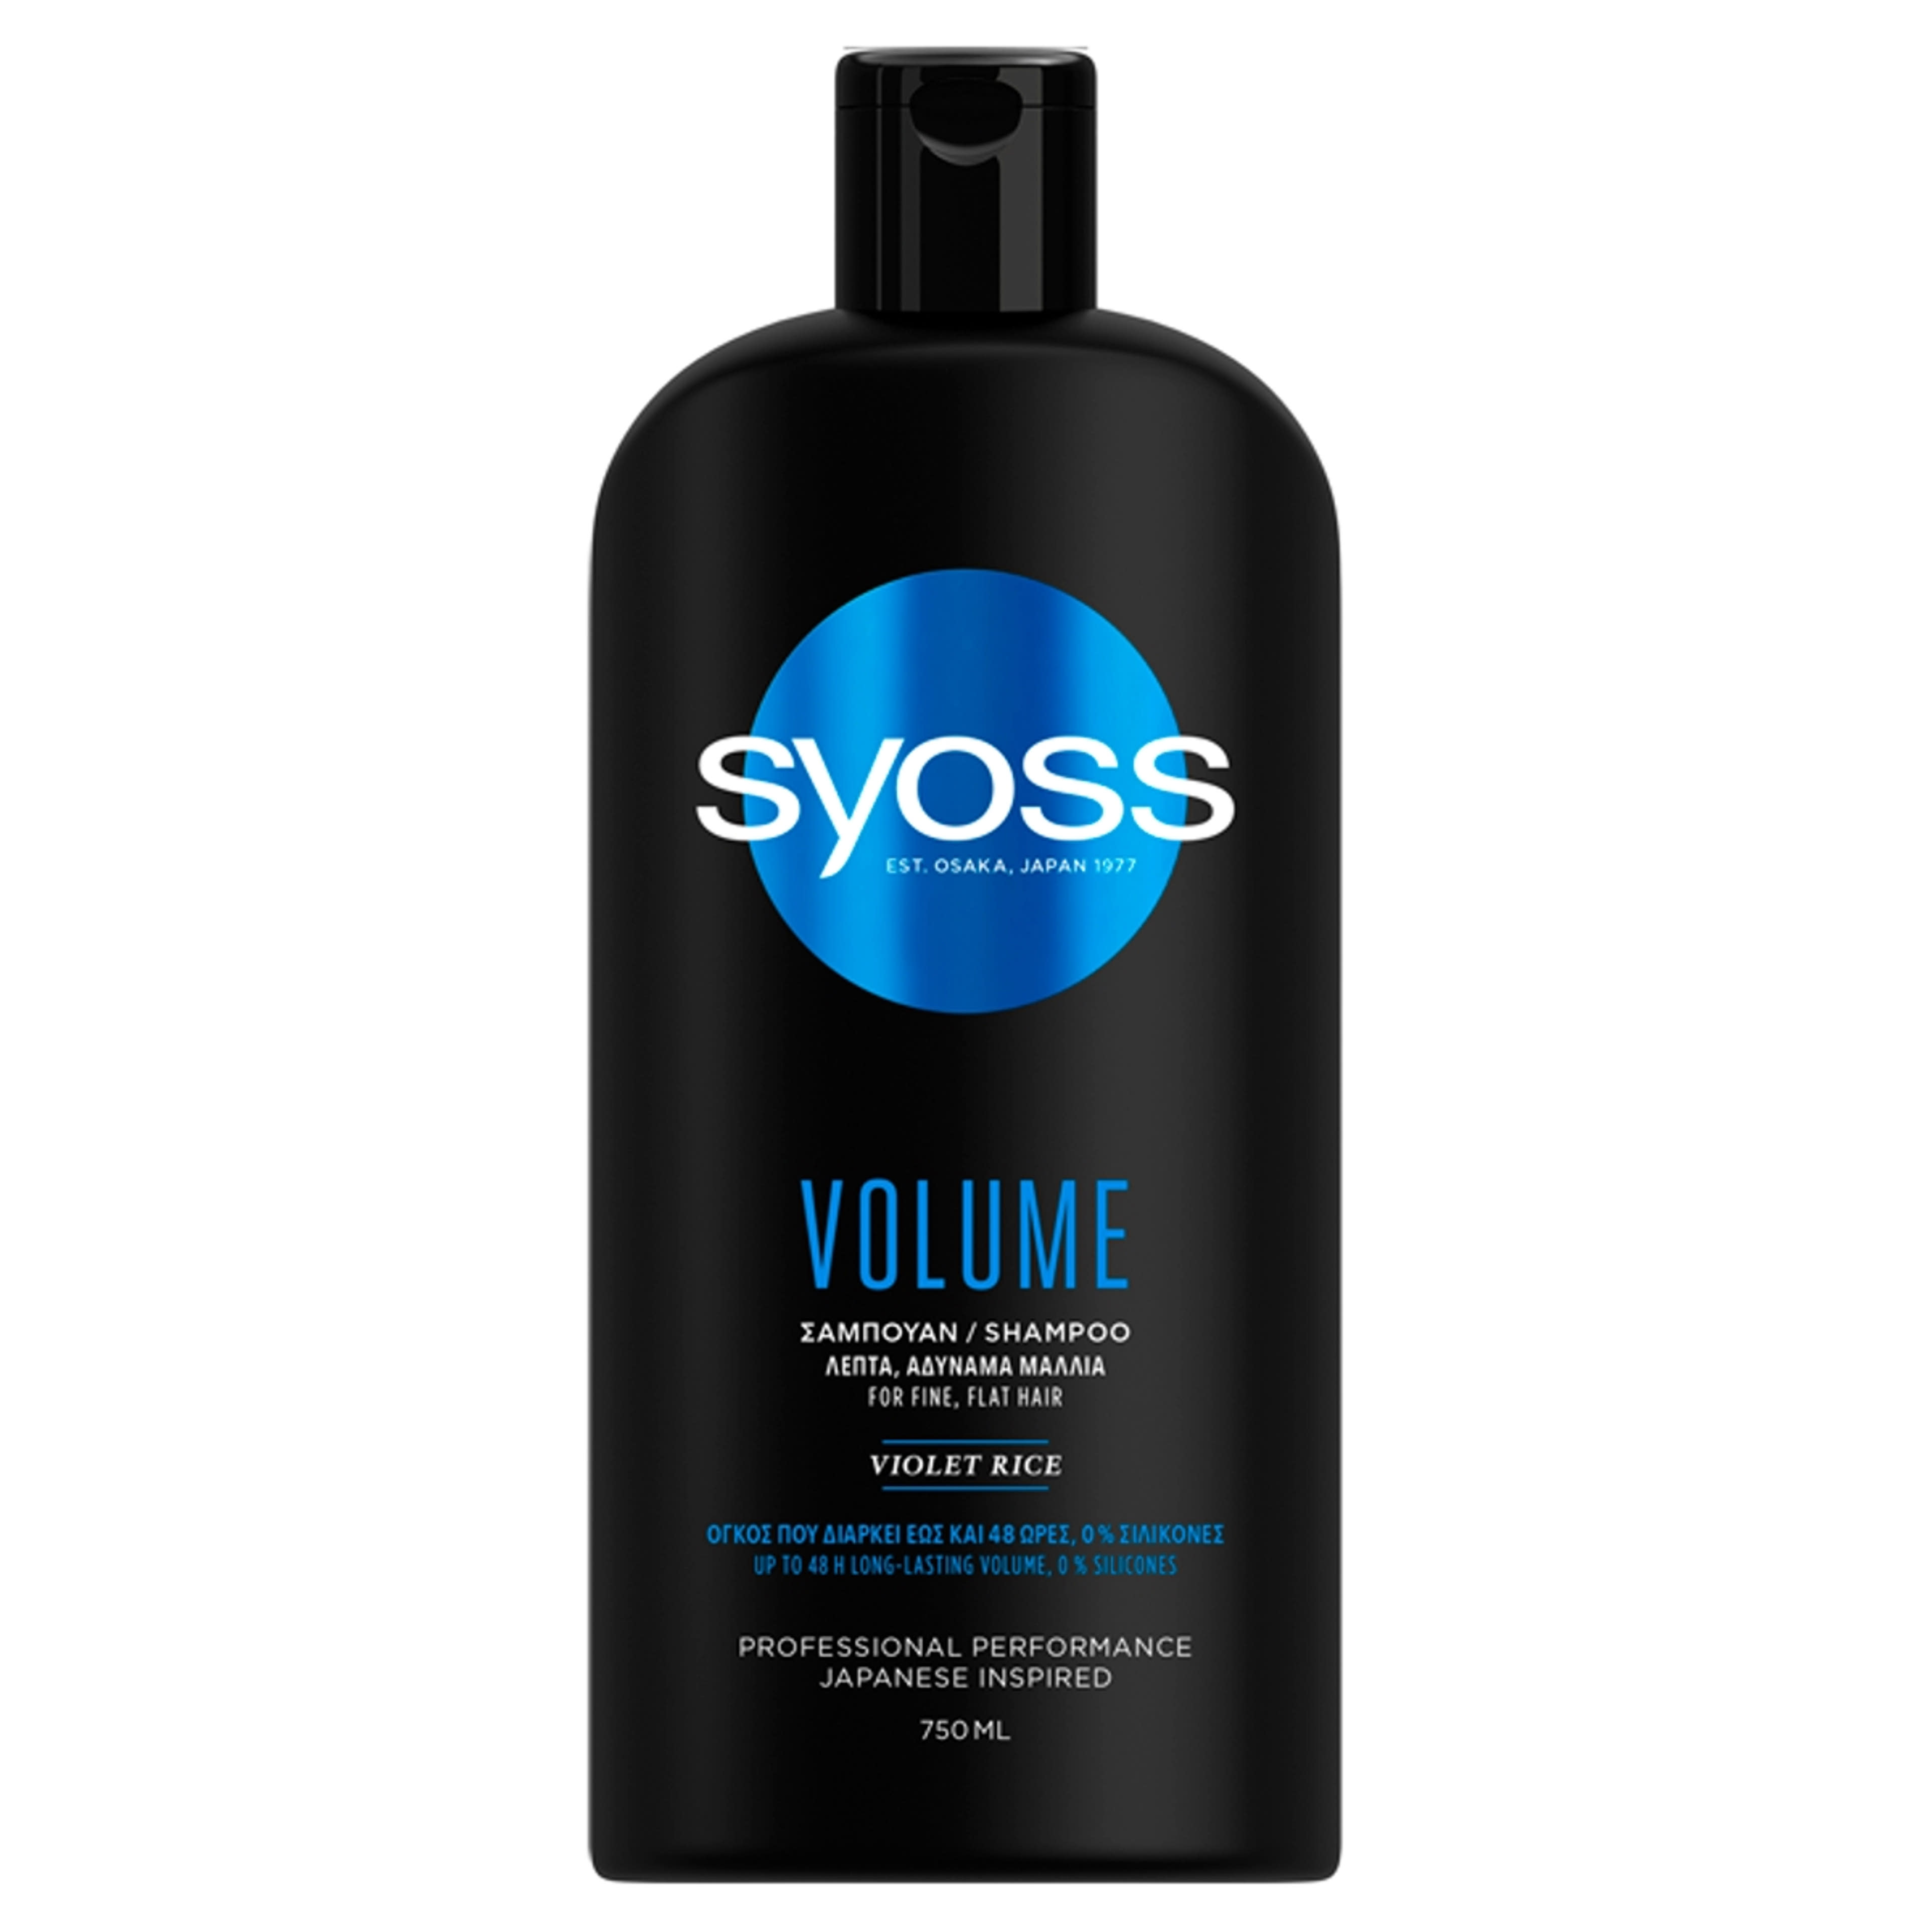 Syoss Volume sampon - 750 ml